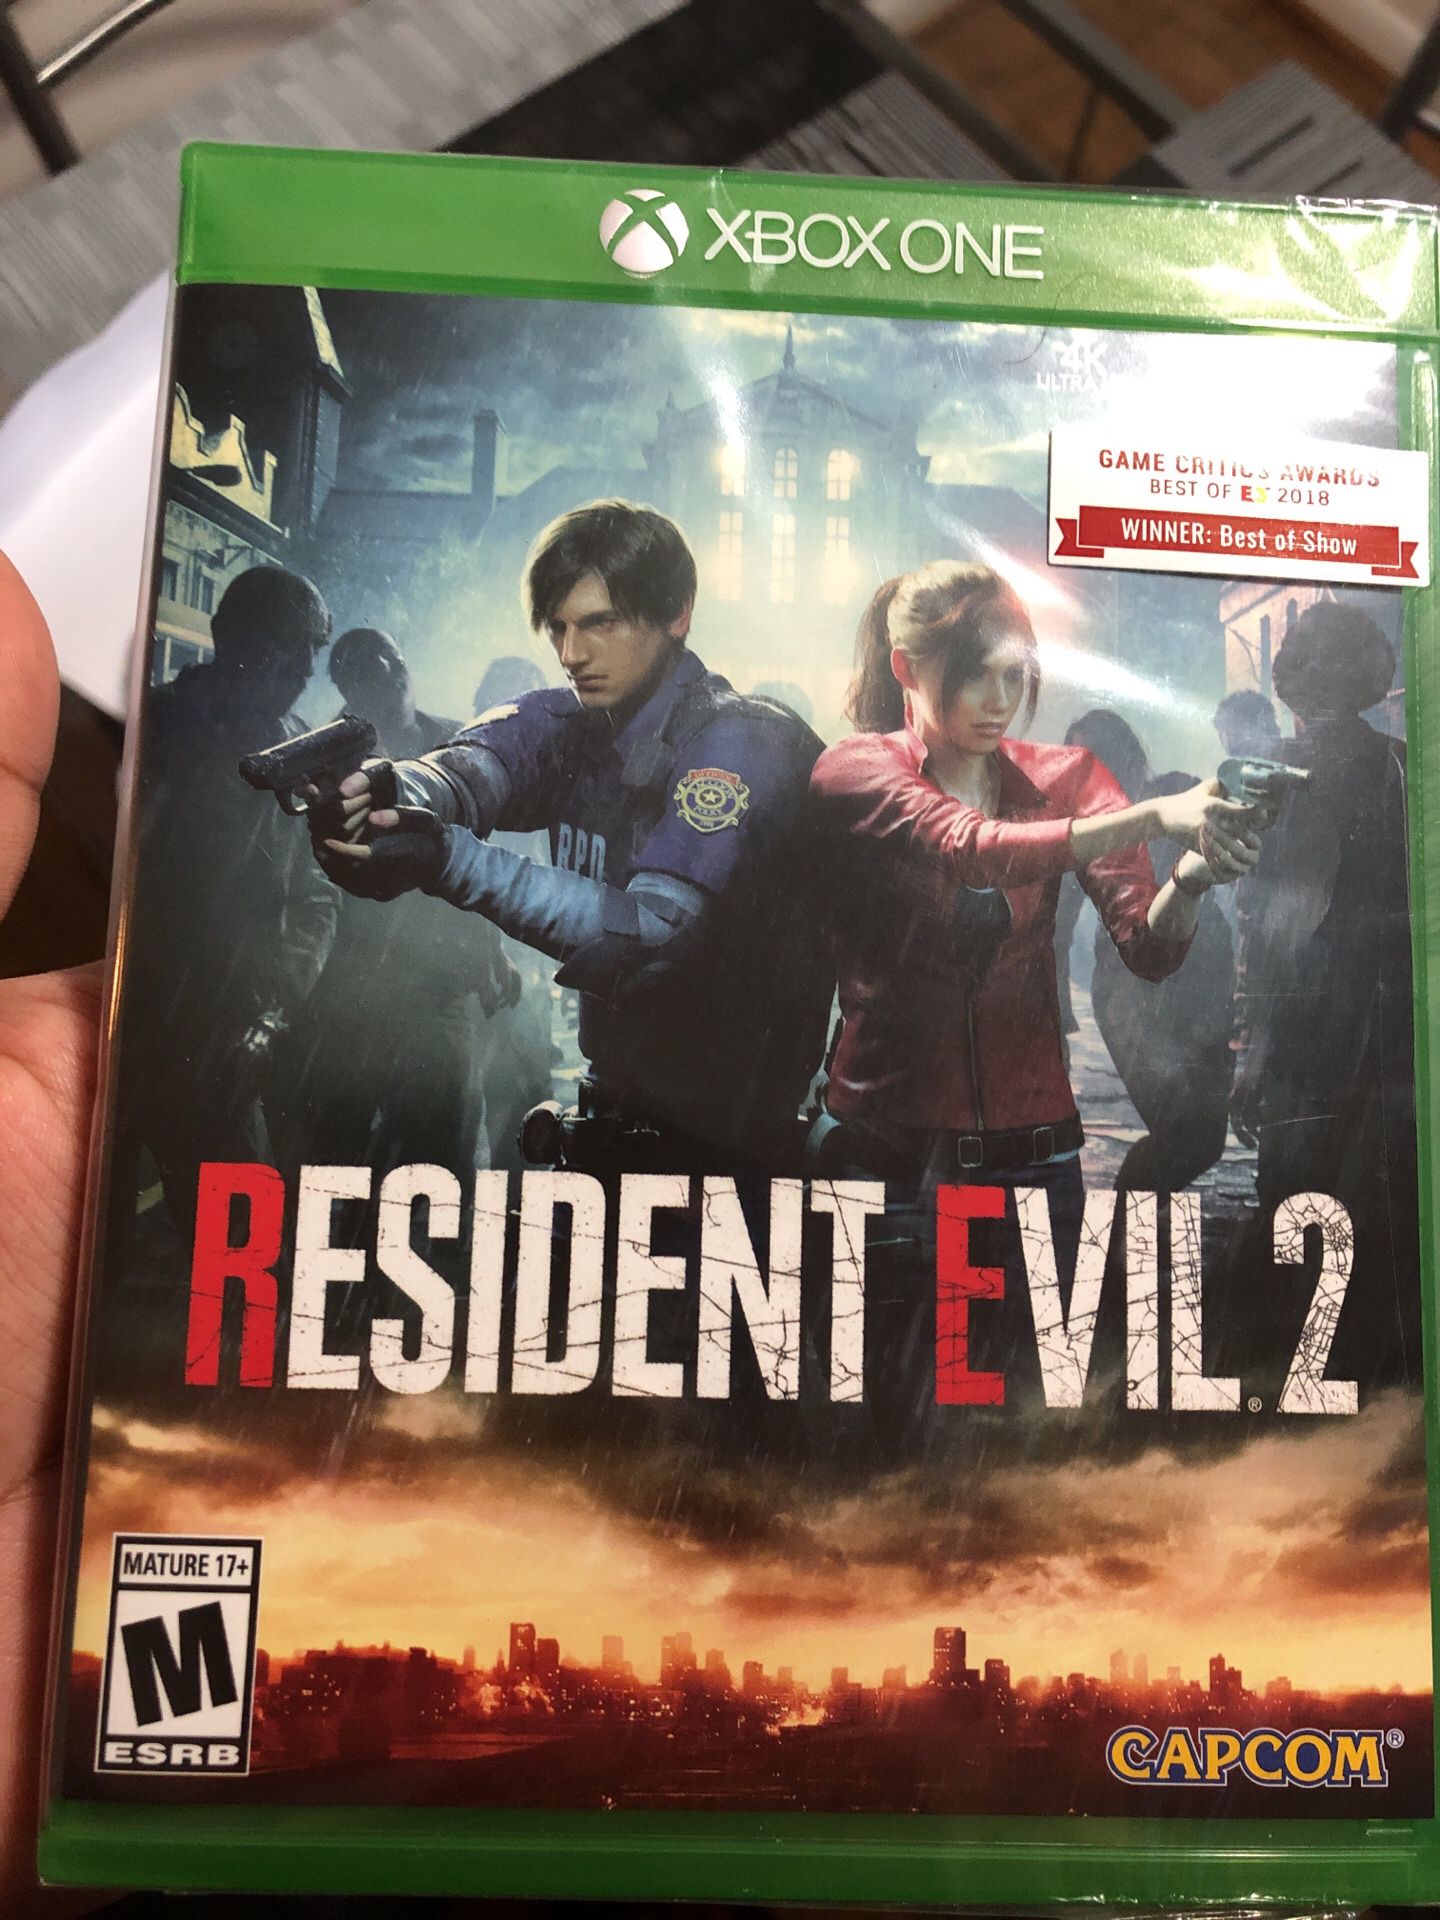 Resident evil 2 for Xbox one